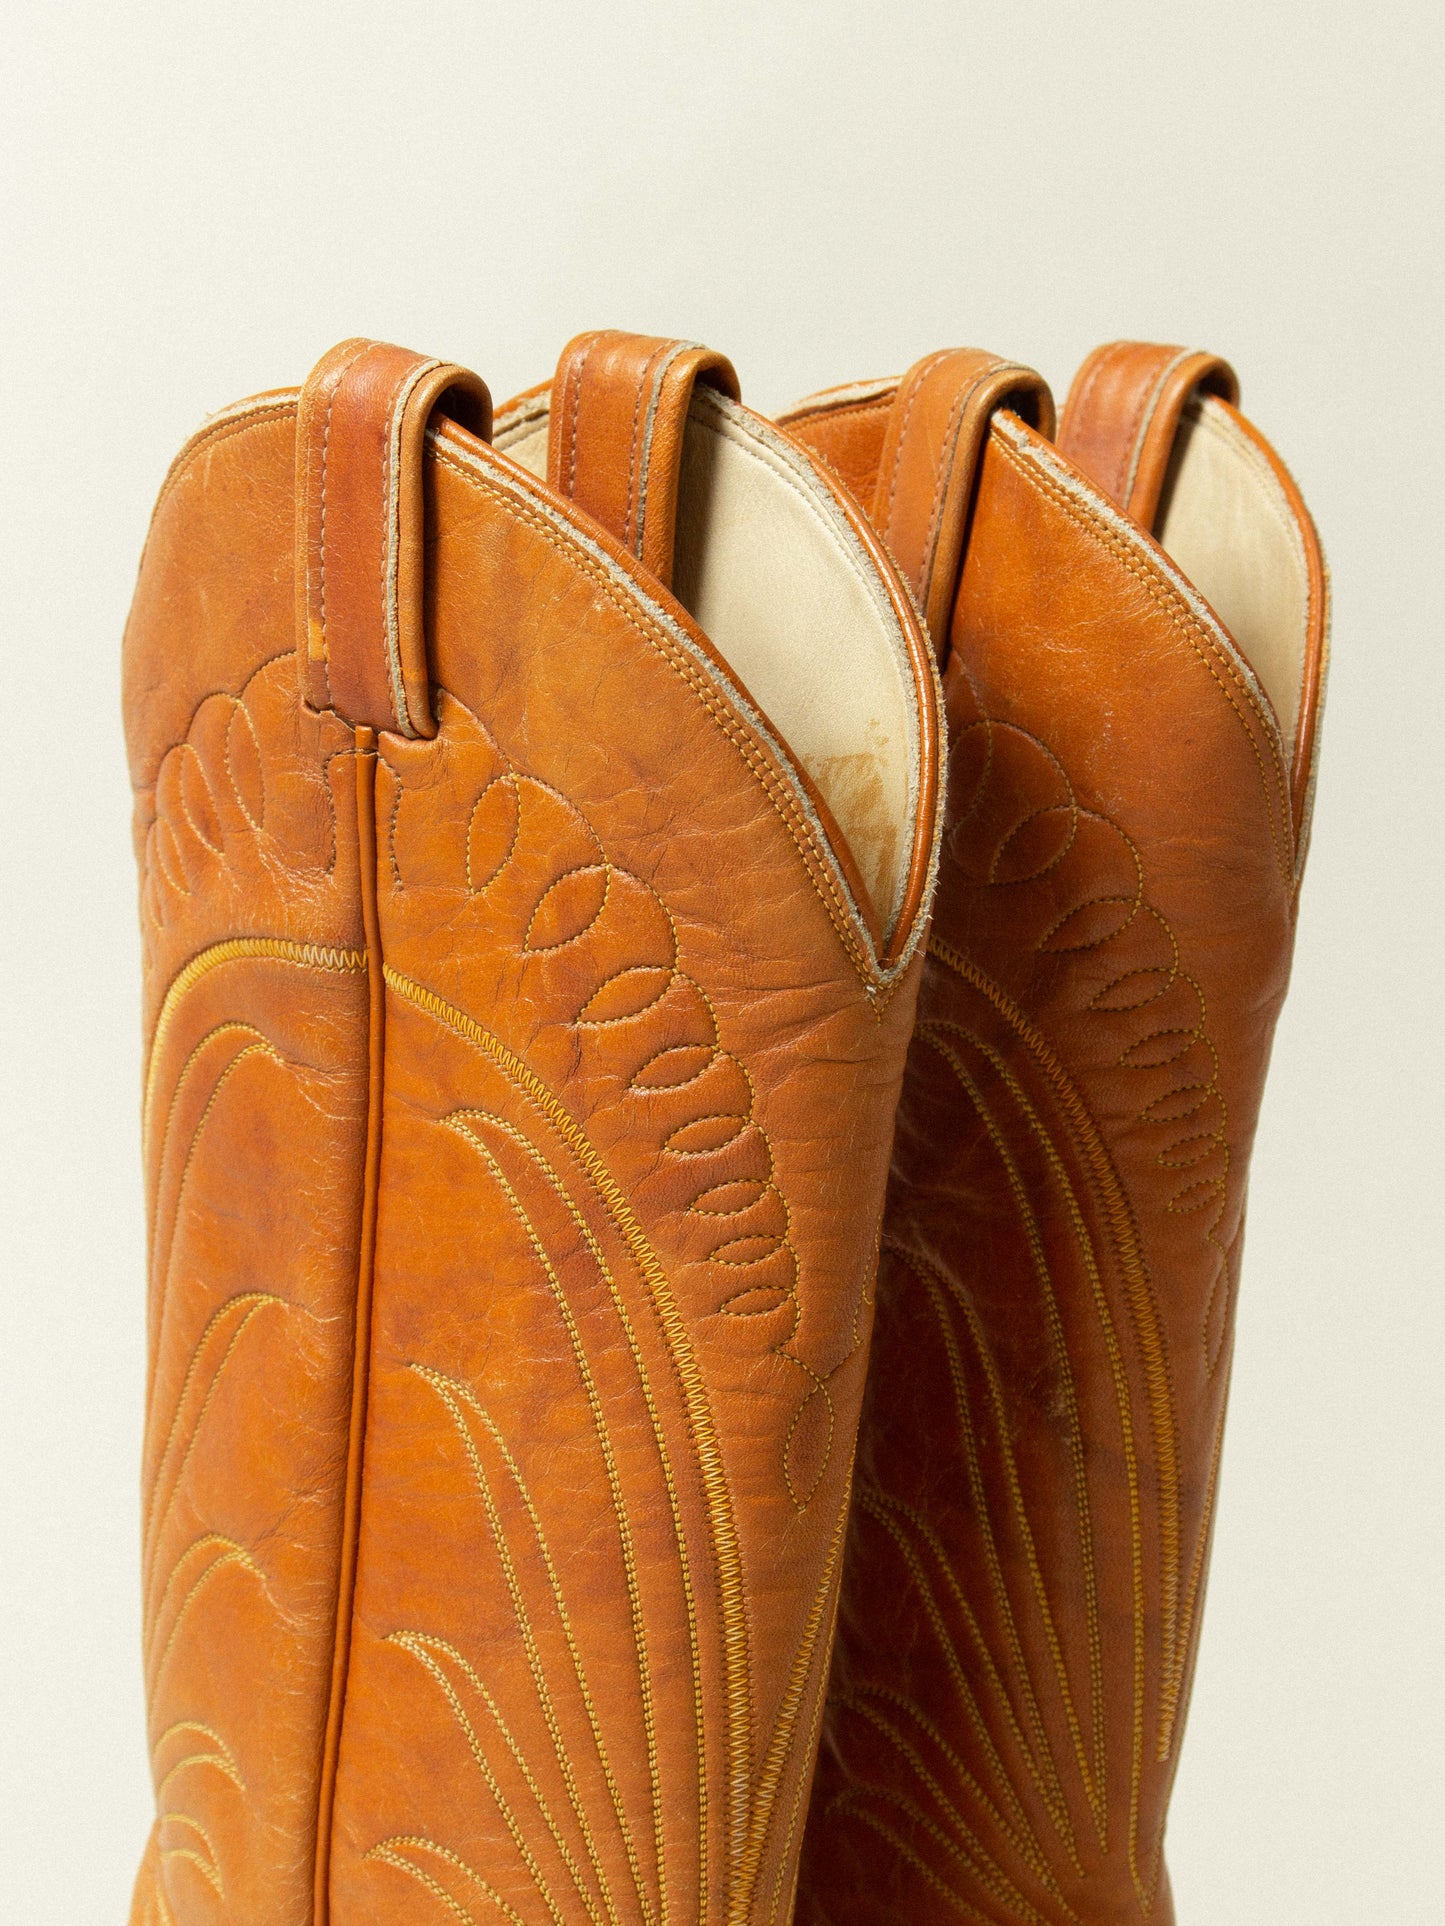 Vtg Women's Tony Lama Cowboy Boots (US 5.5)